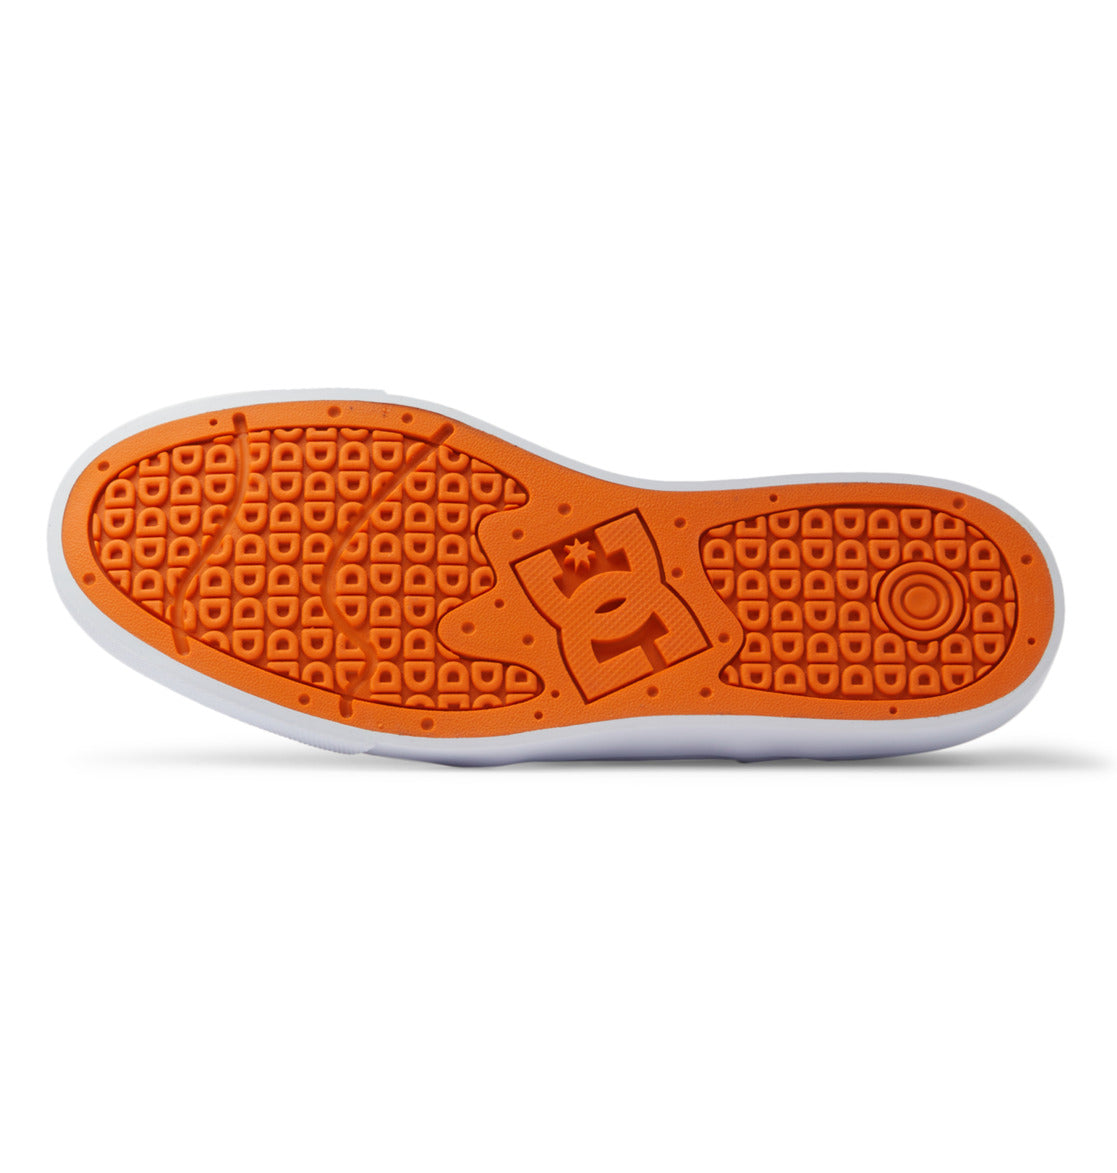 Zapatilla de skate Dc Shoes Teknic - Olive Camo | surfdevils.com